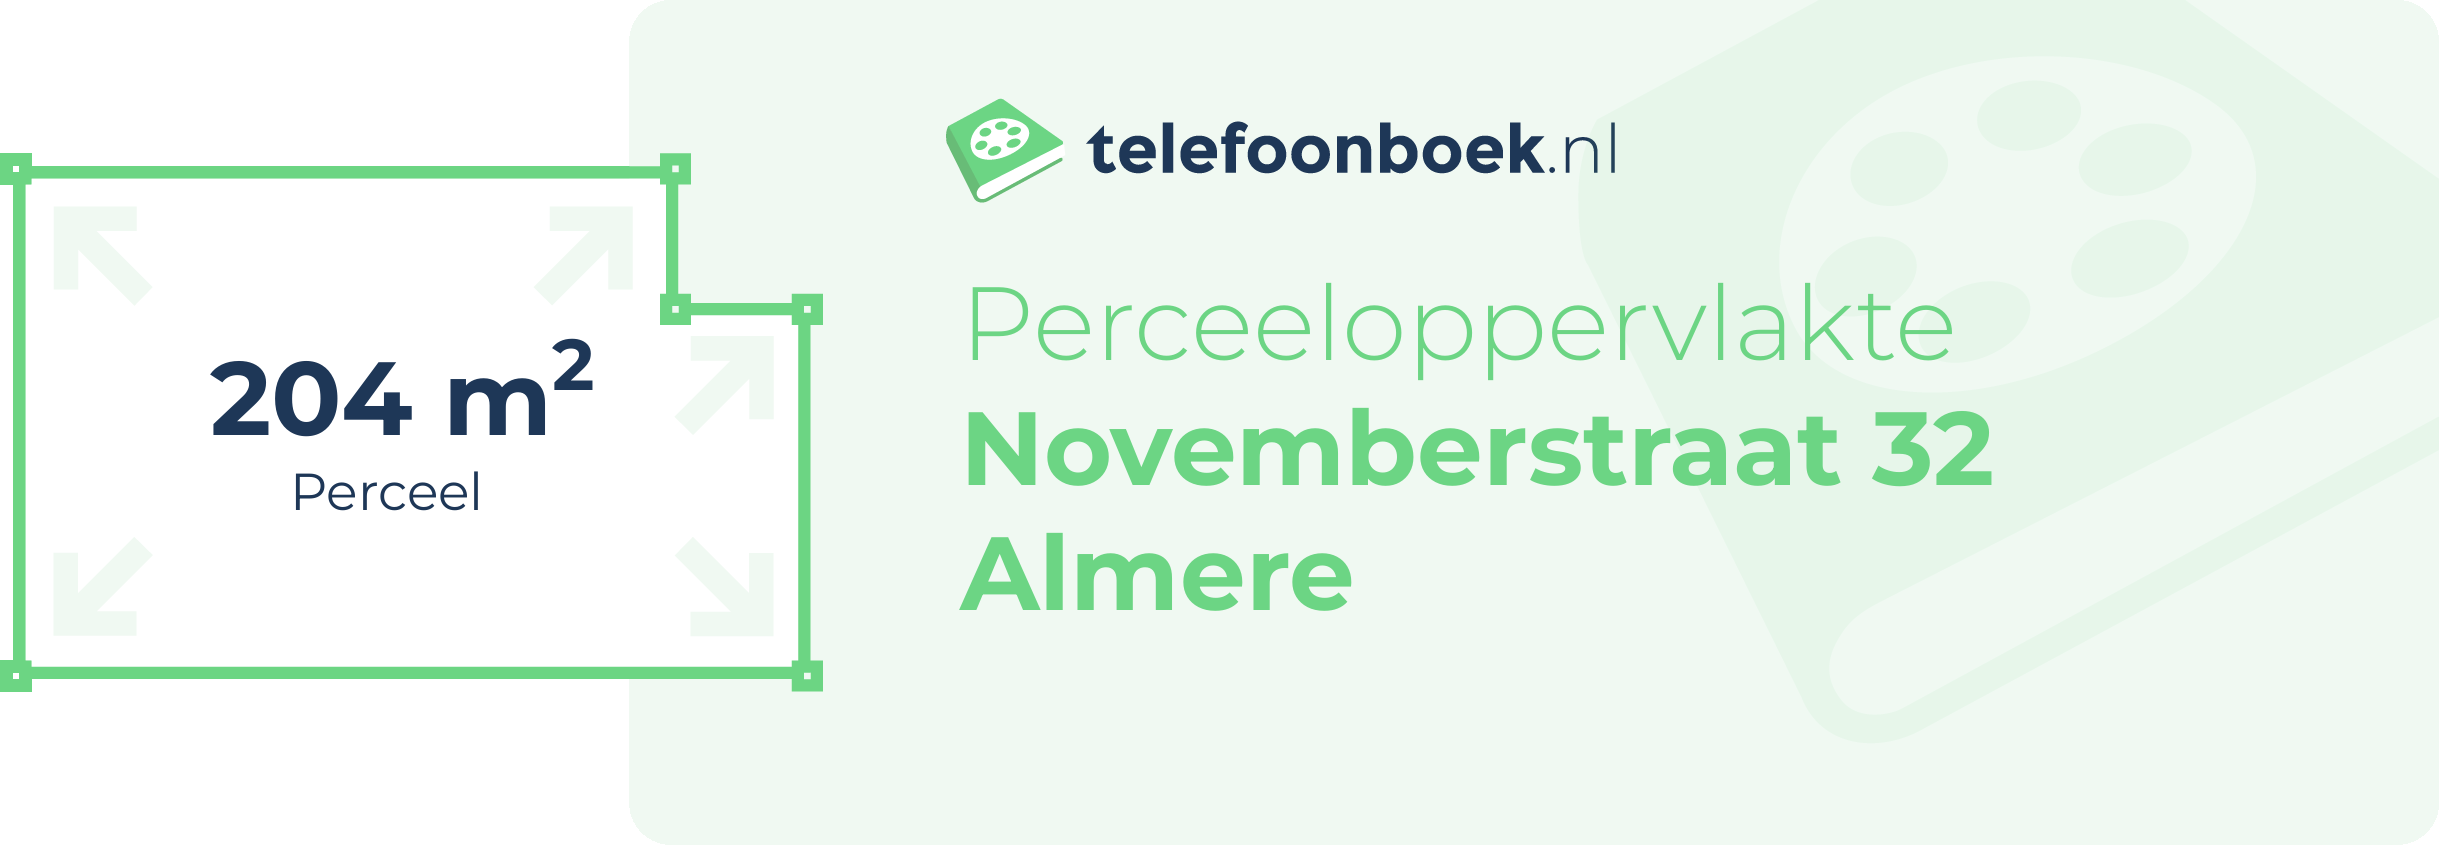 Perceeloppervlakte Novemberstraat 32 Almere